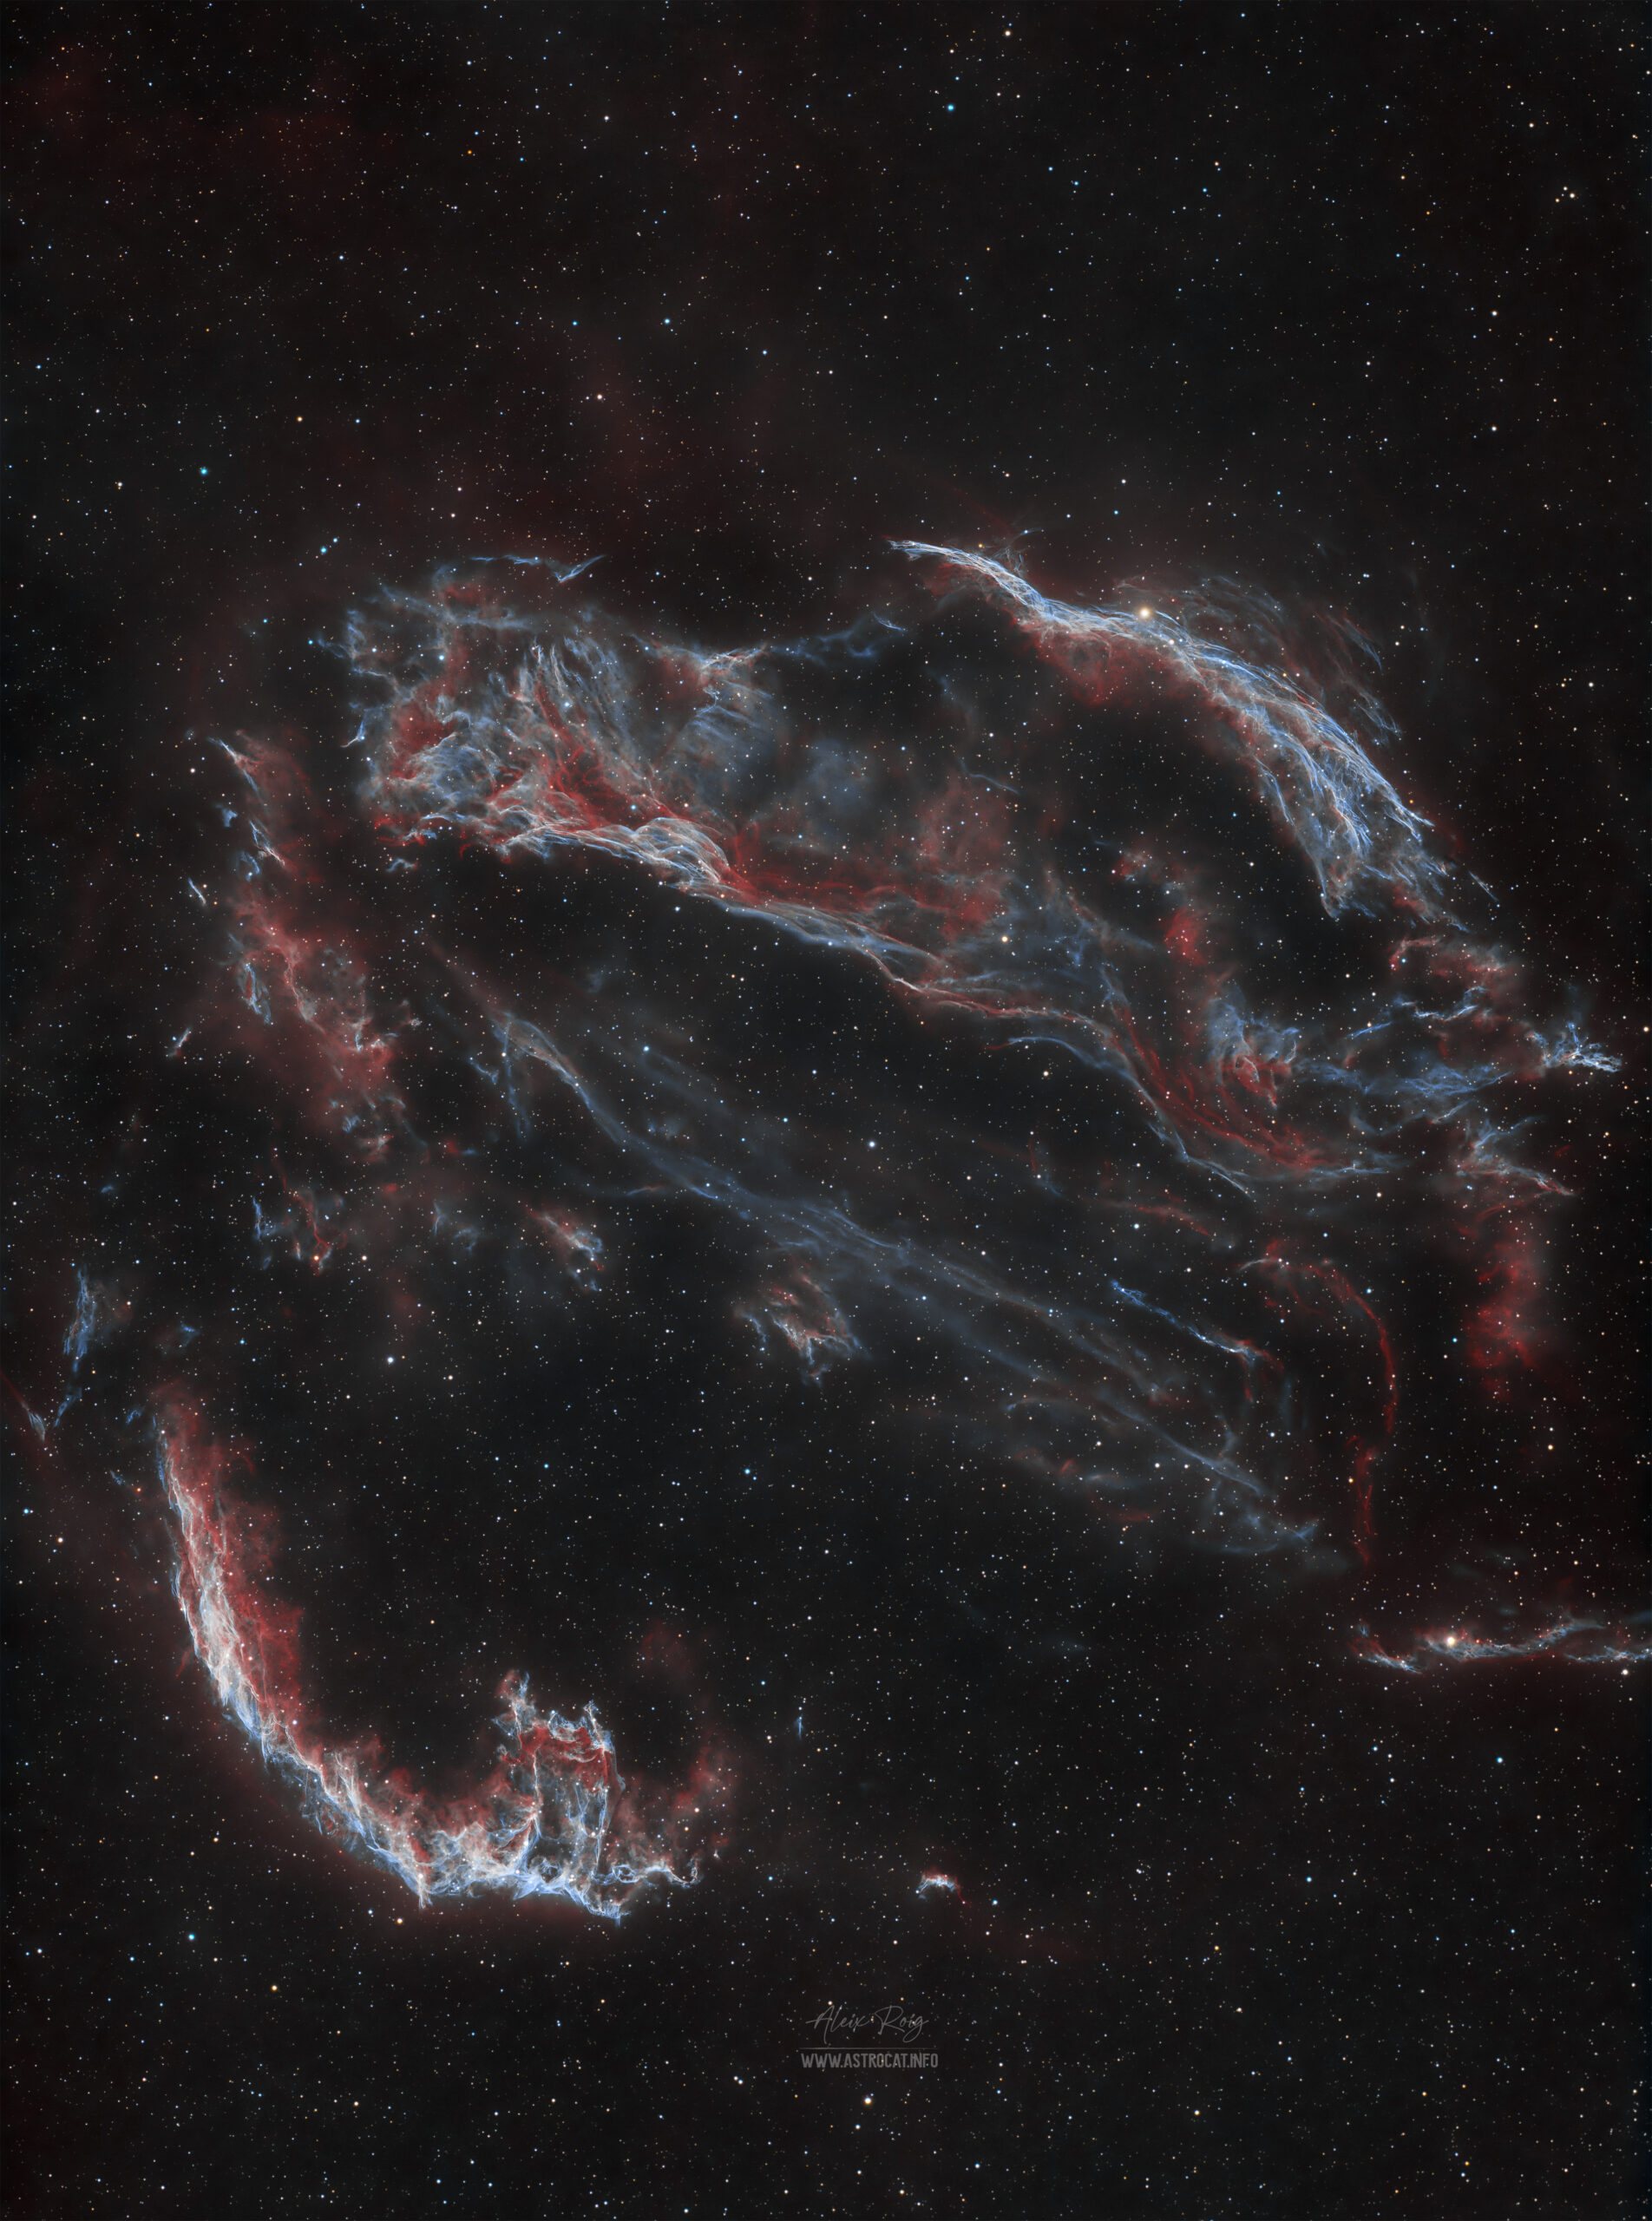 The Veil Nebula Supernova Remnant